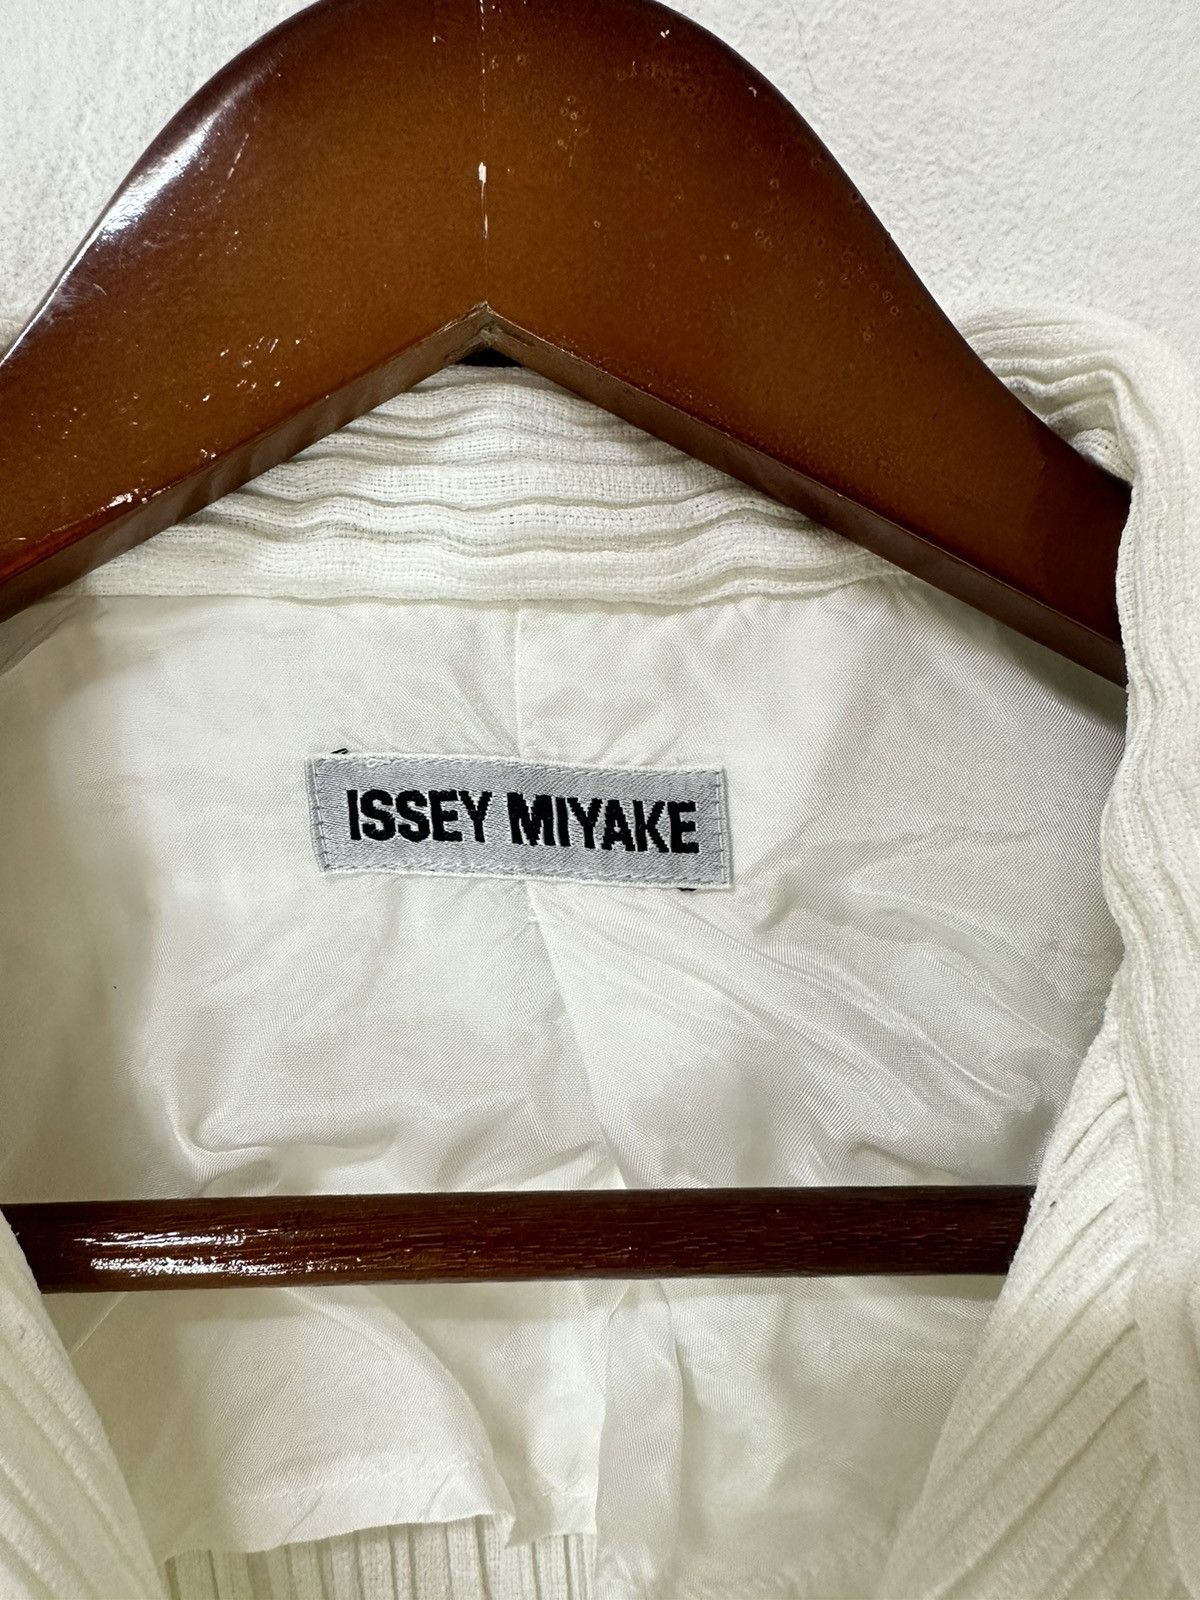 Issey Miyake Pleats Please Button Jacket Design - 4